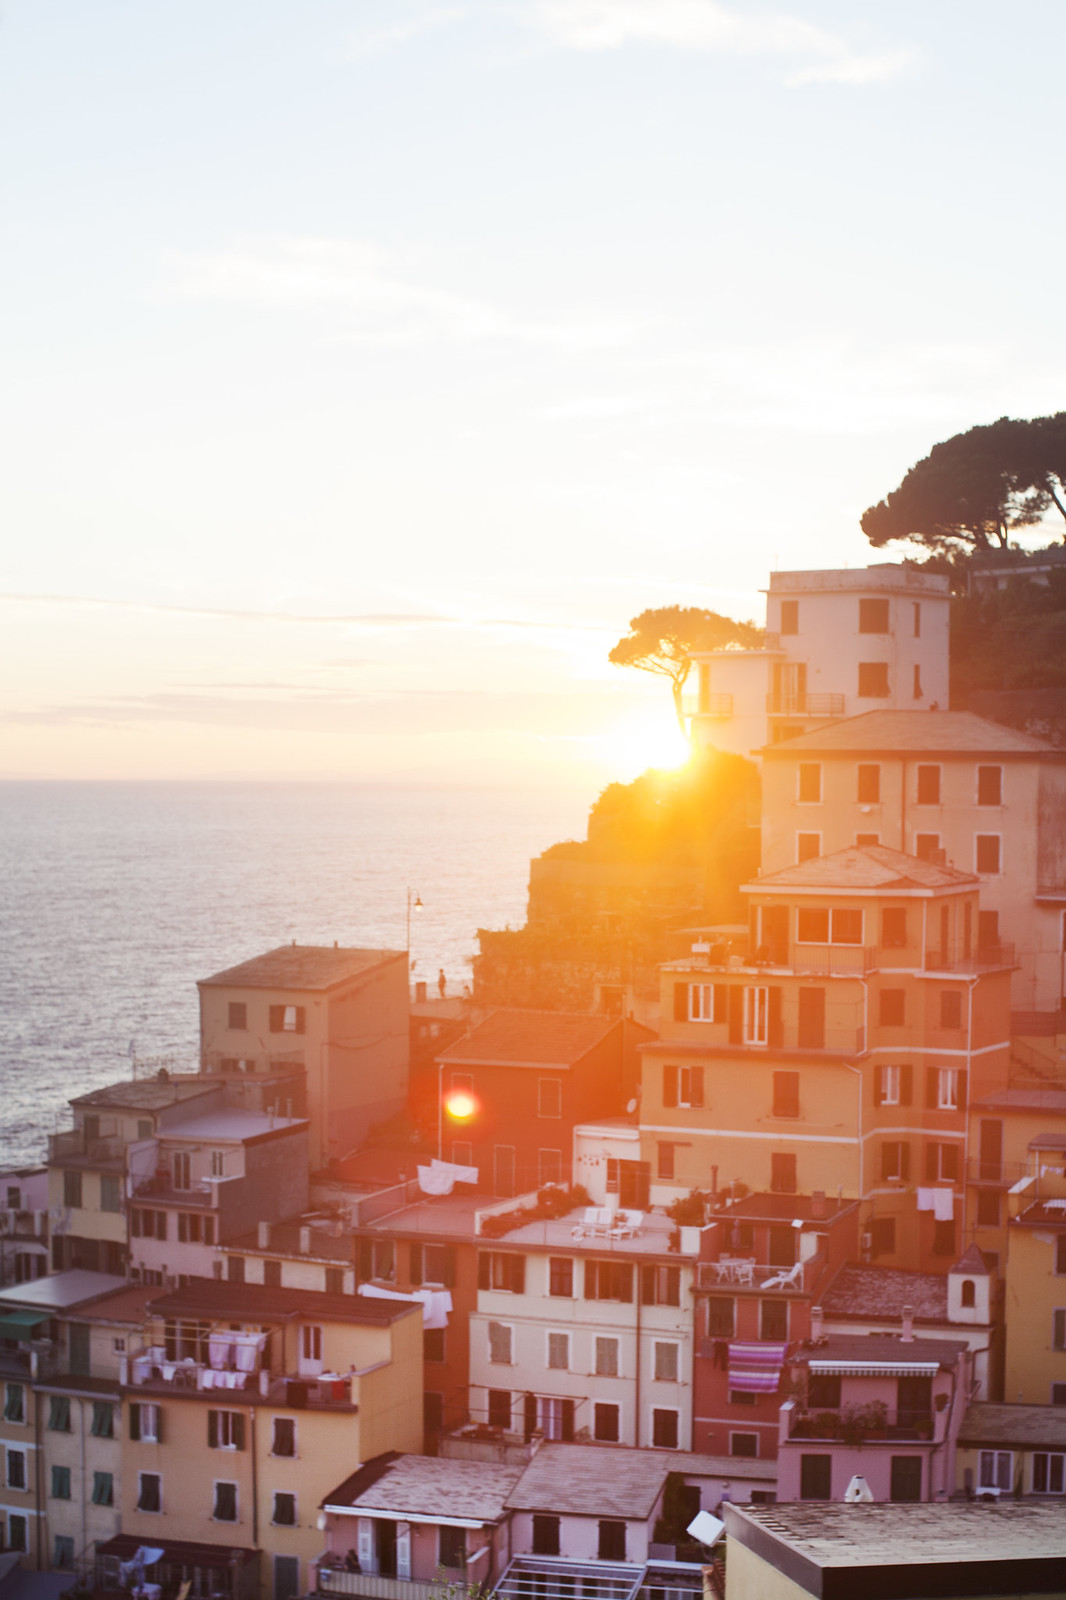 Riomaggiore, Cinque Terre, Italy at sunset